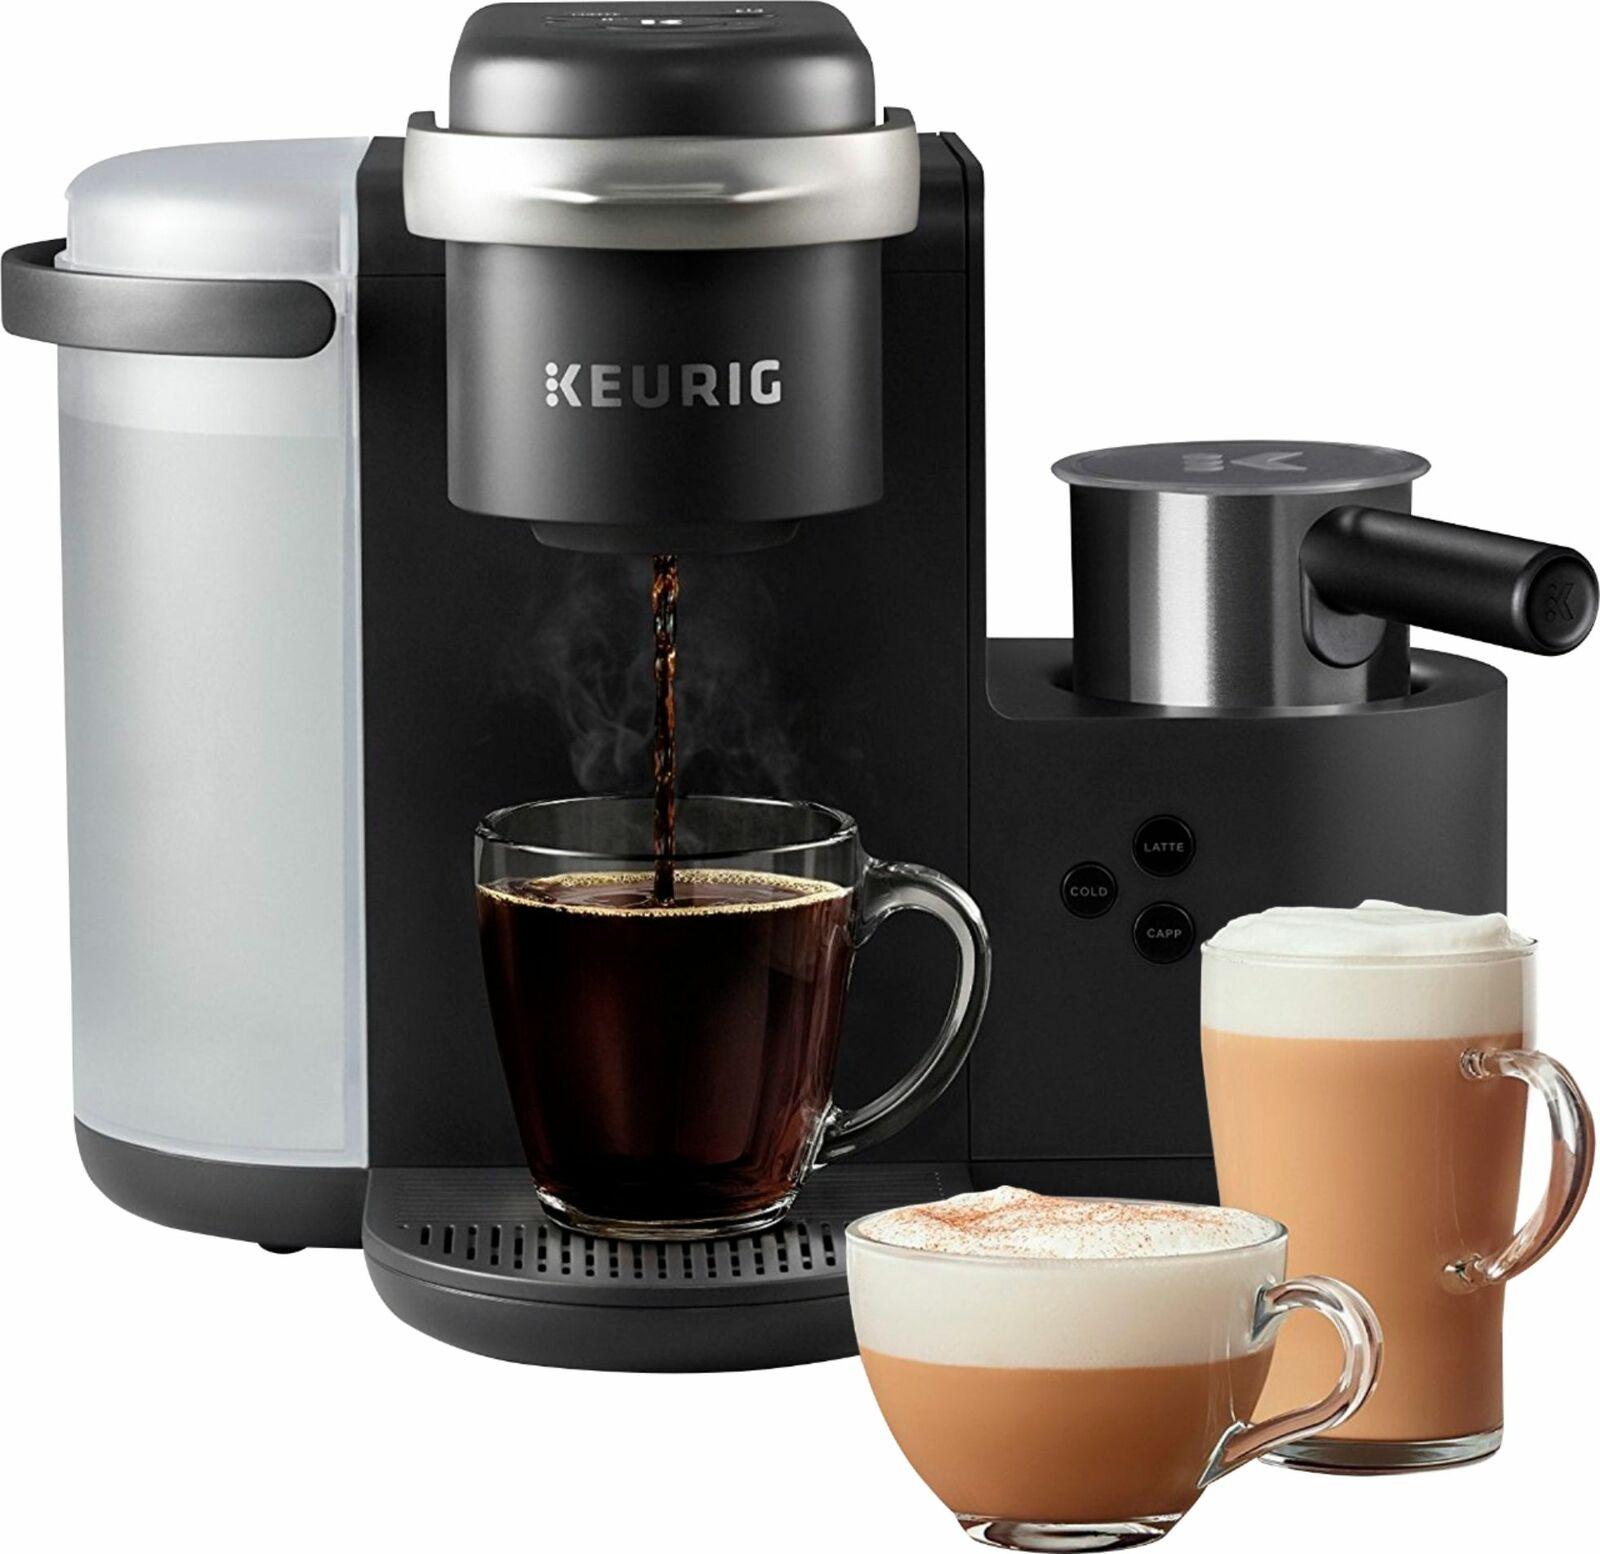 Keurig K-Cafe Single Serve K-Cup Coffee Maker for $109.99 Shipped